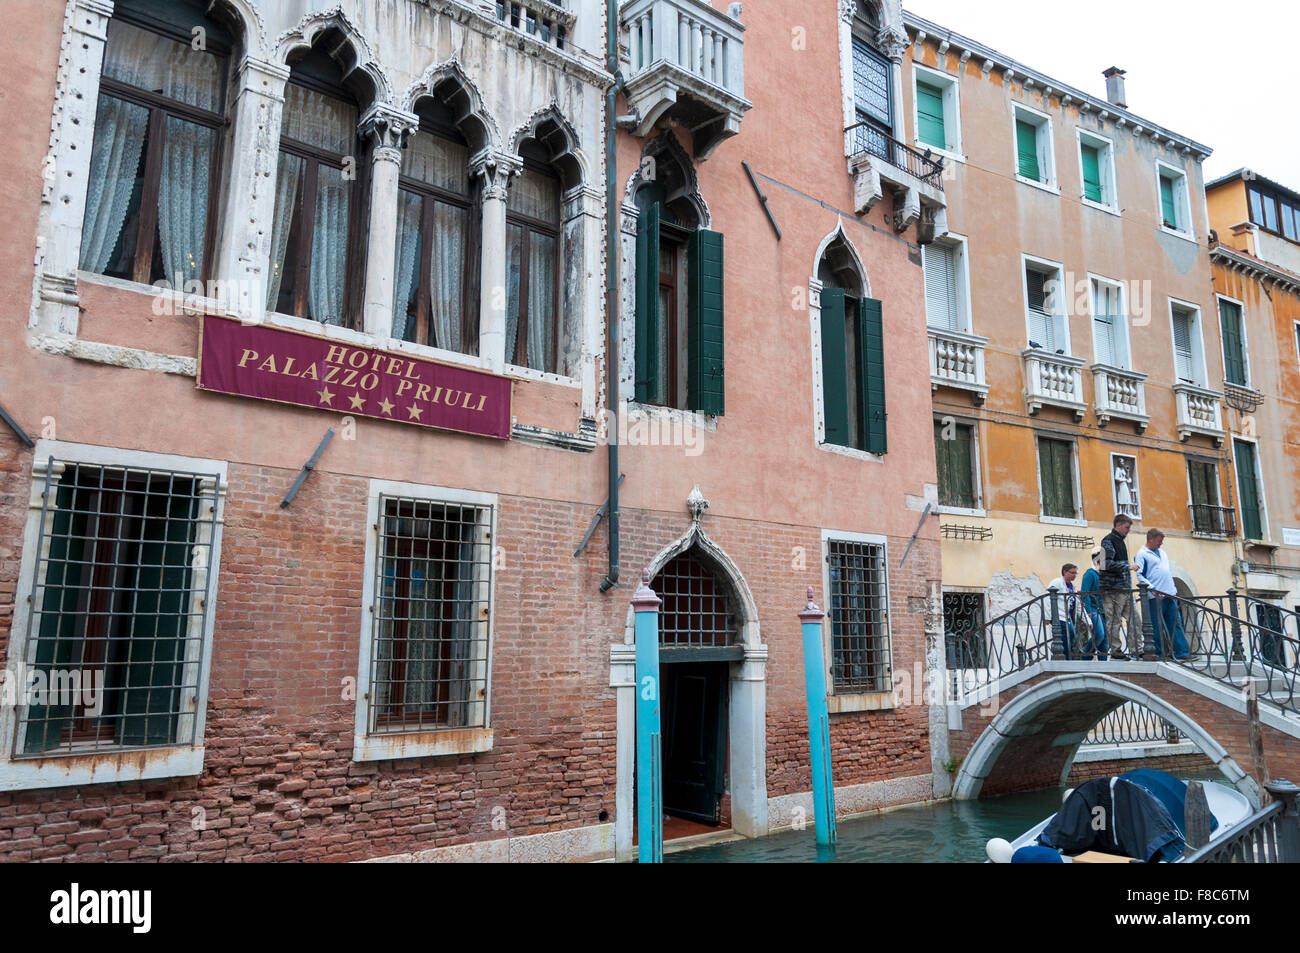 Hotel Palazzo Priuli, Venezia, Italia Foto stock - Alamy